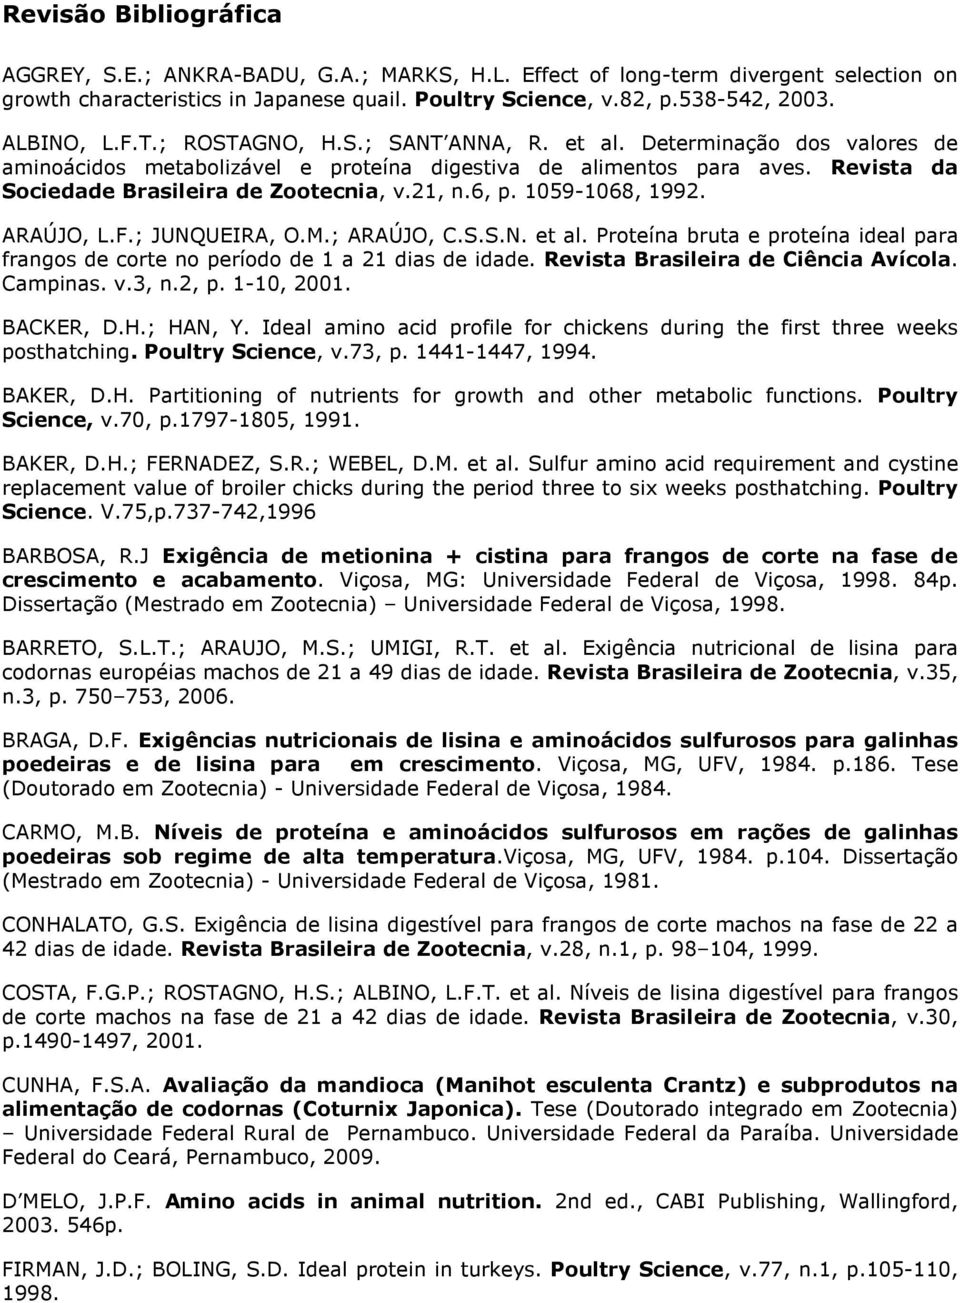 21, n.6, p. 1059-1068, 1992. ARAÚJO, L.F.; JUNQUEIRA, O.M.; ARAÚJO, C.S.S.N. et al. Proteína bruta e proteína ideal para frangos de corte no período de 1 a 21 dias de idade.